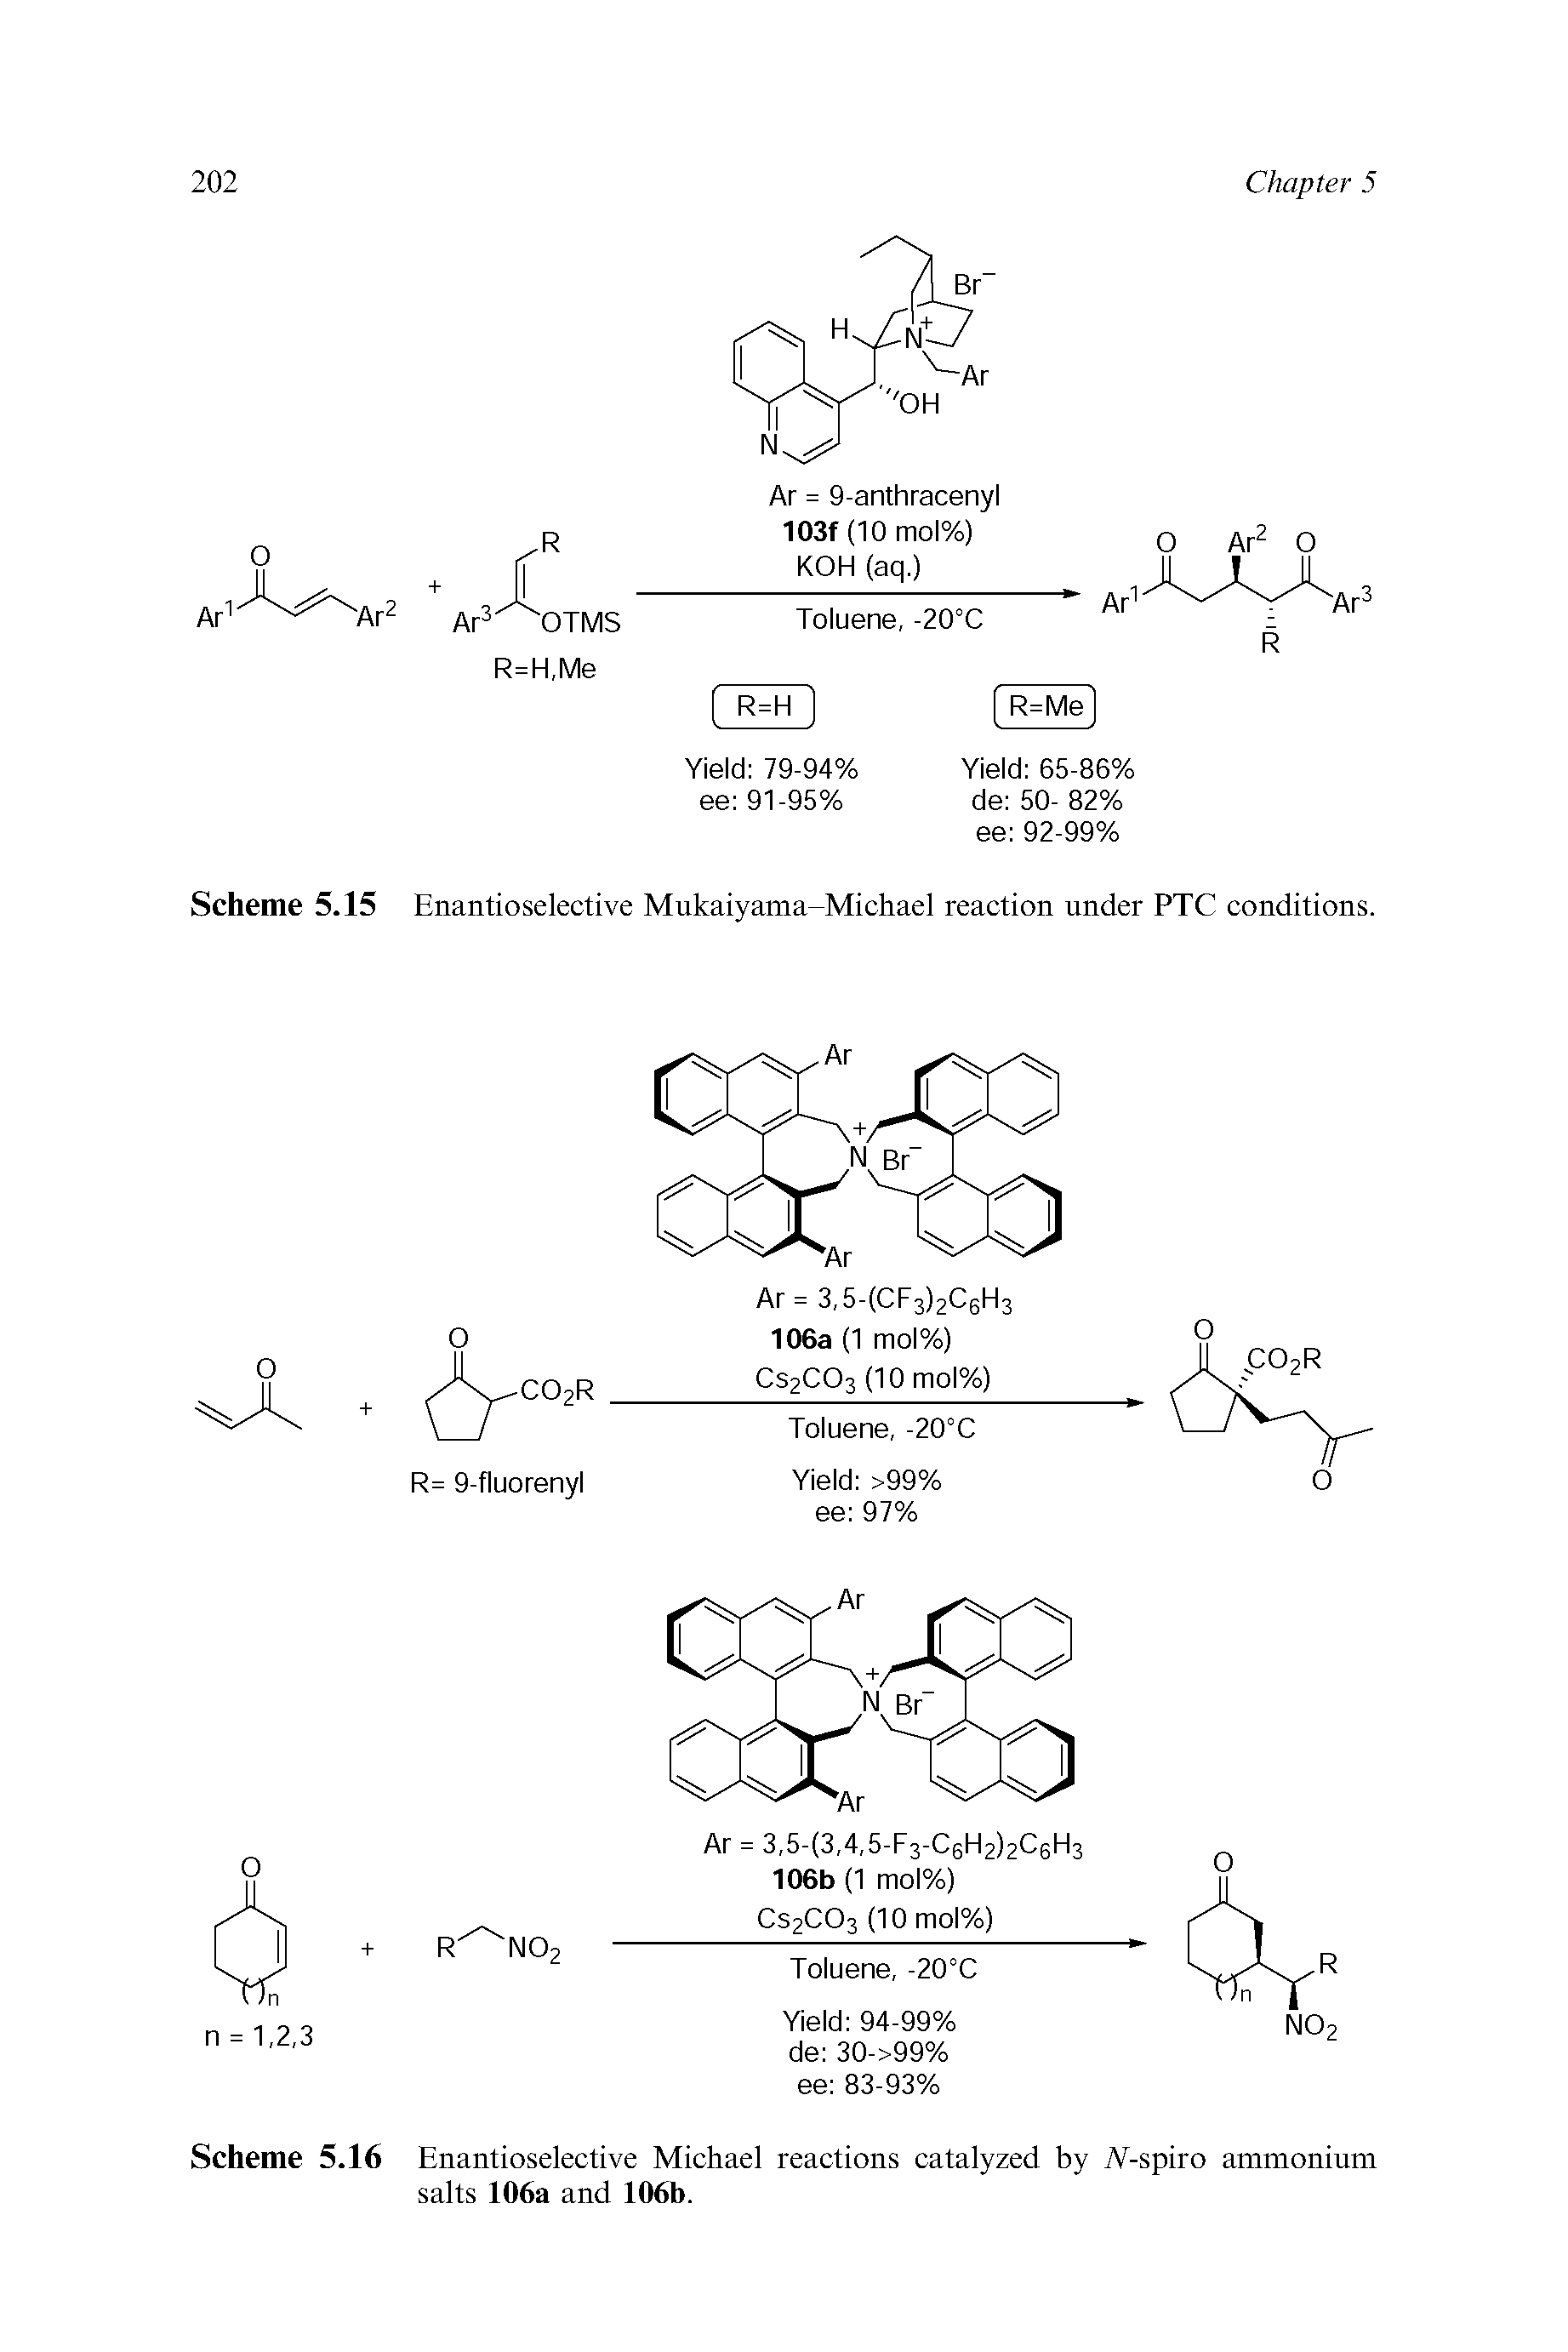 Scheme 5.16 Enantioselective Michael reactions catalyzed by A -spiro ammonium salts 106a and 106b.